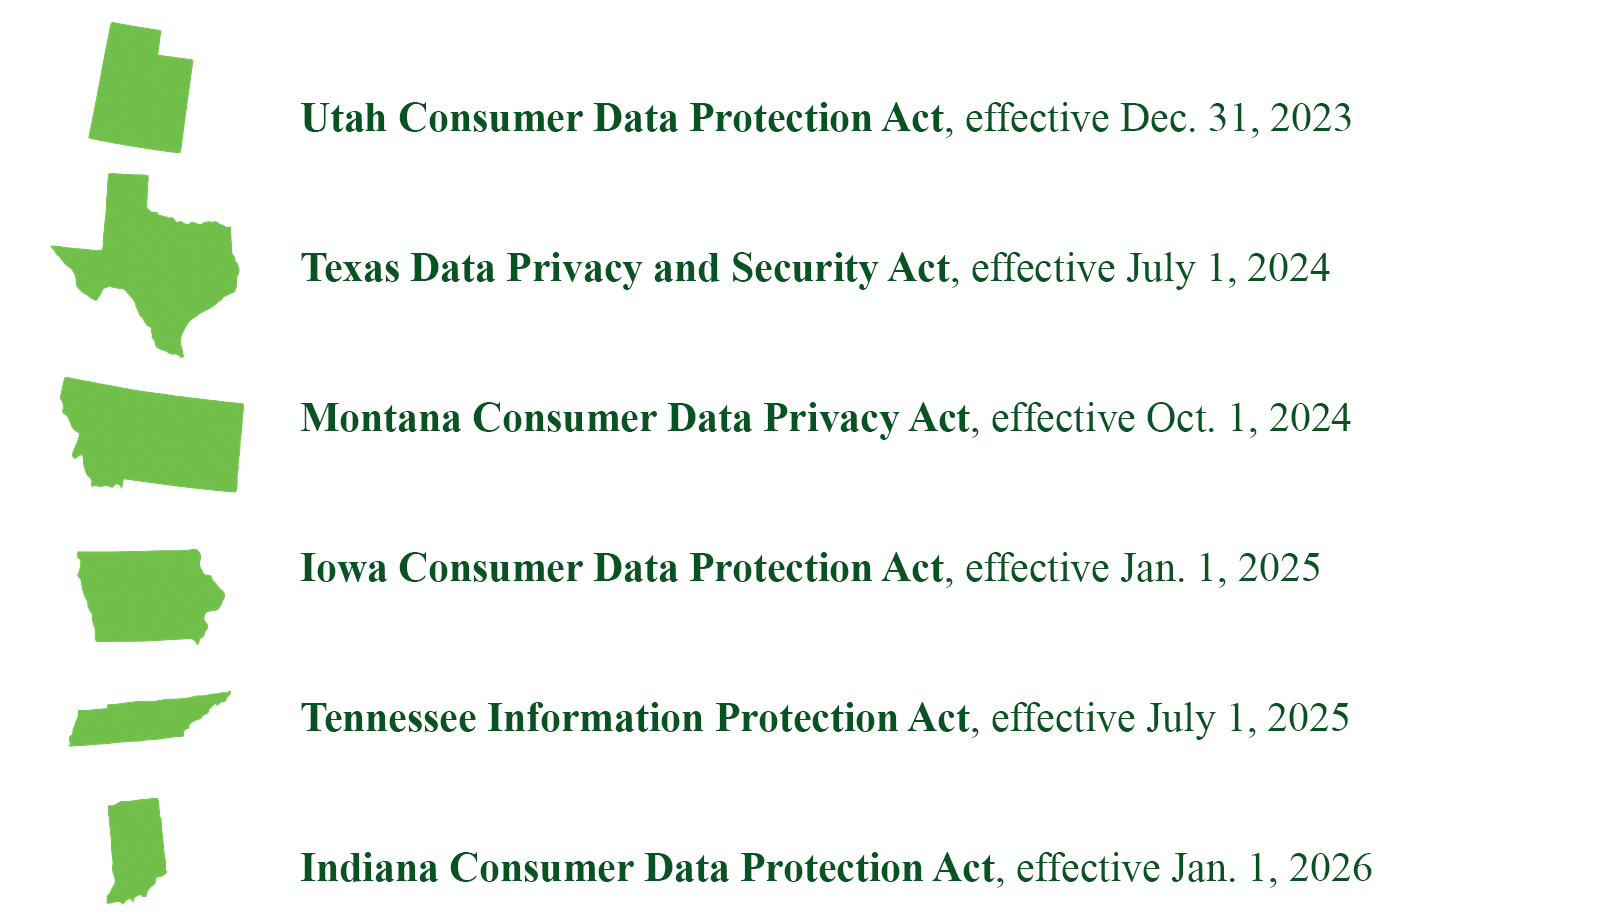 UT, TX, MT, IA, TN, IN privacy laws